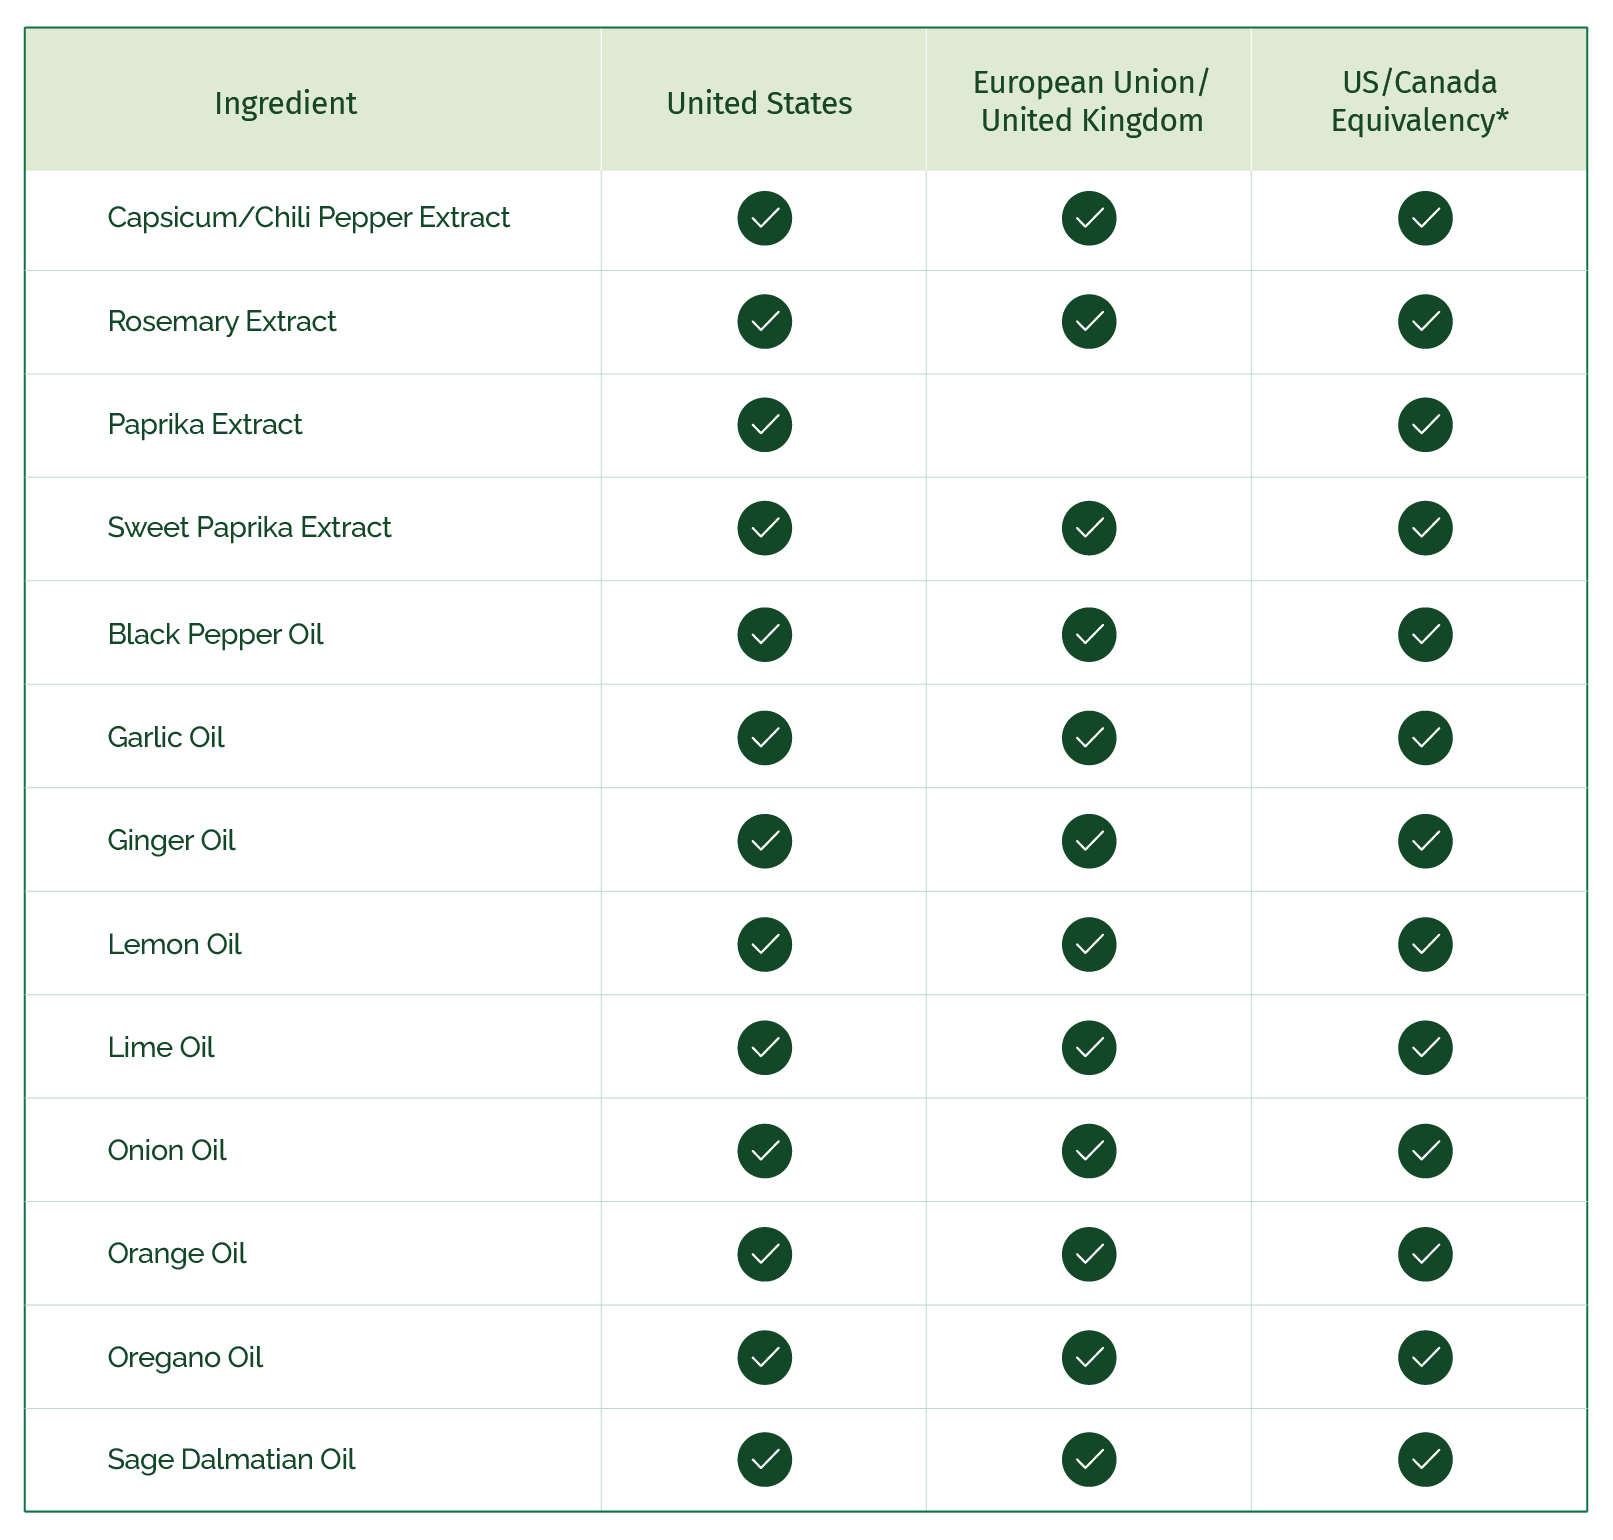 Kalsec's Range of Certified Organic Products